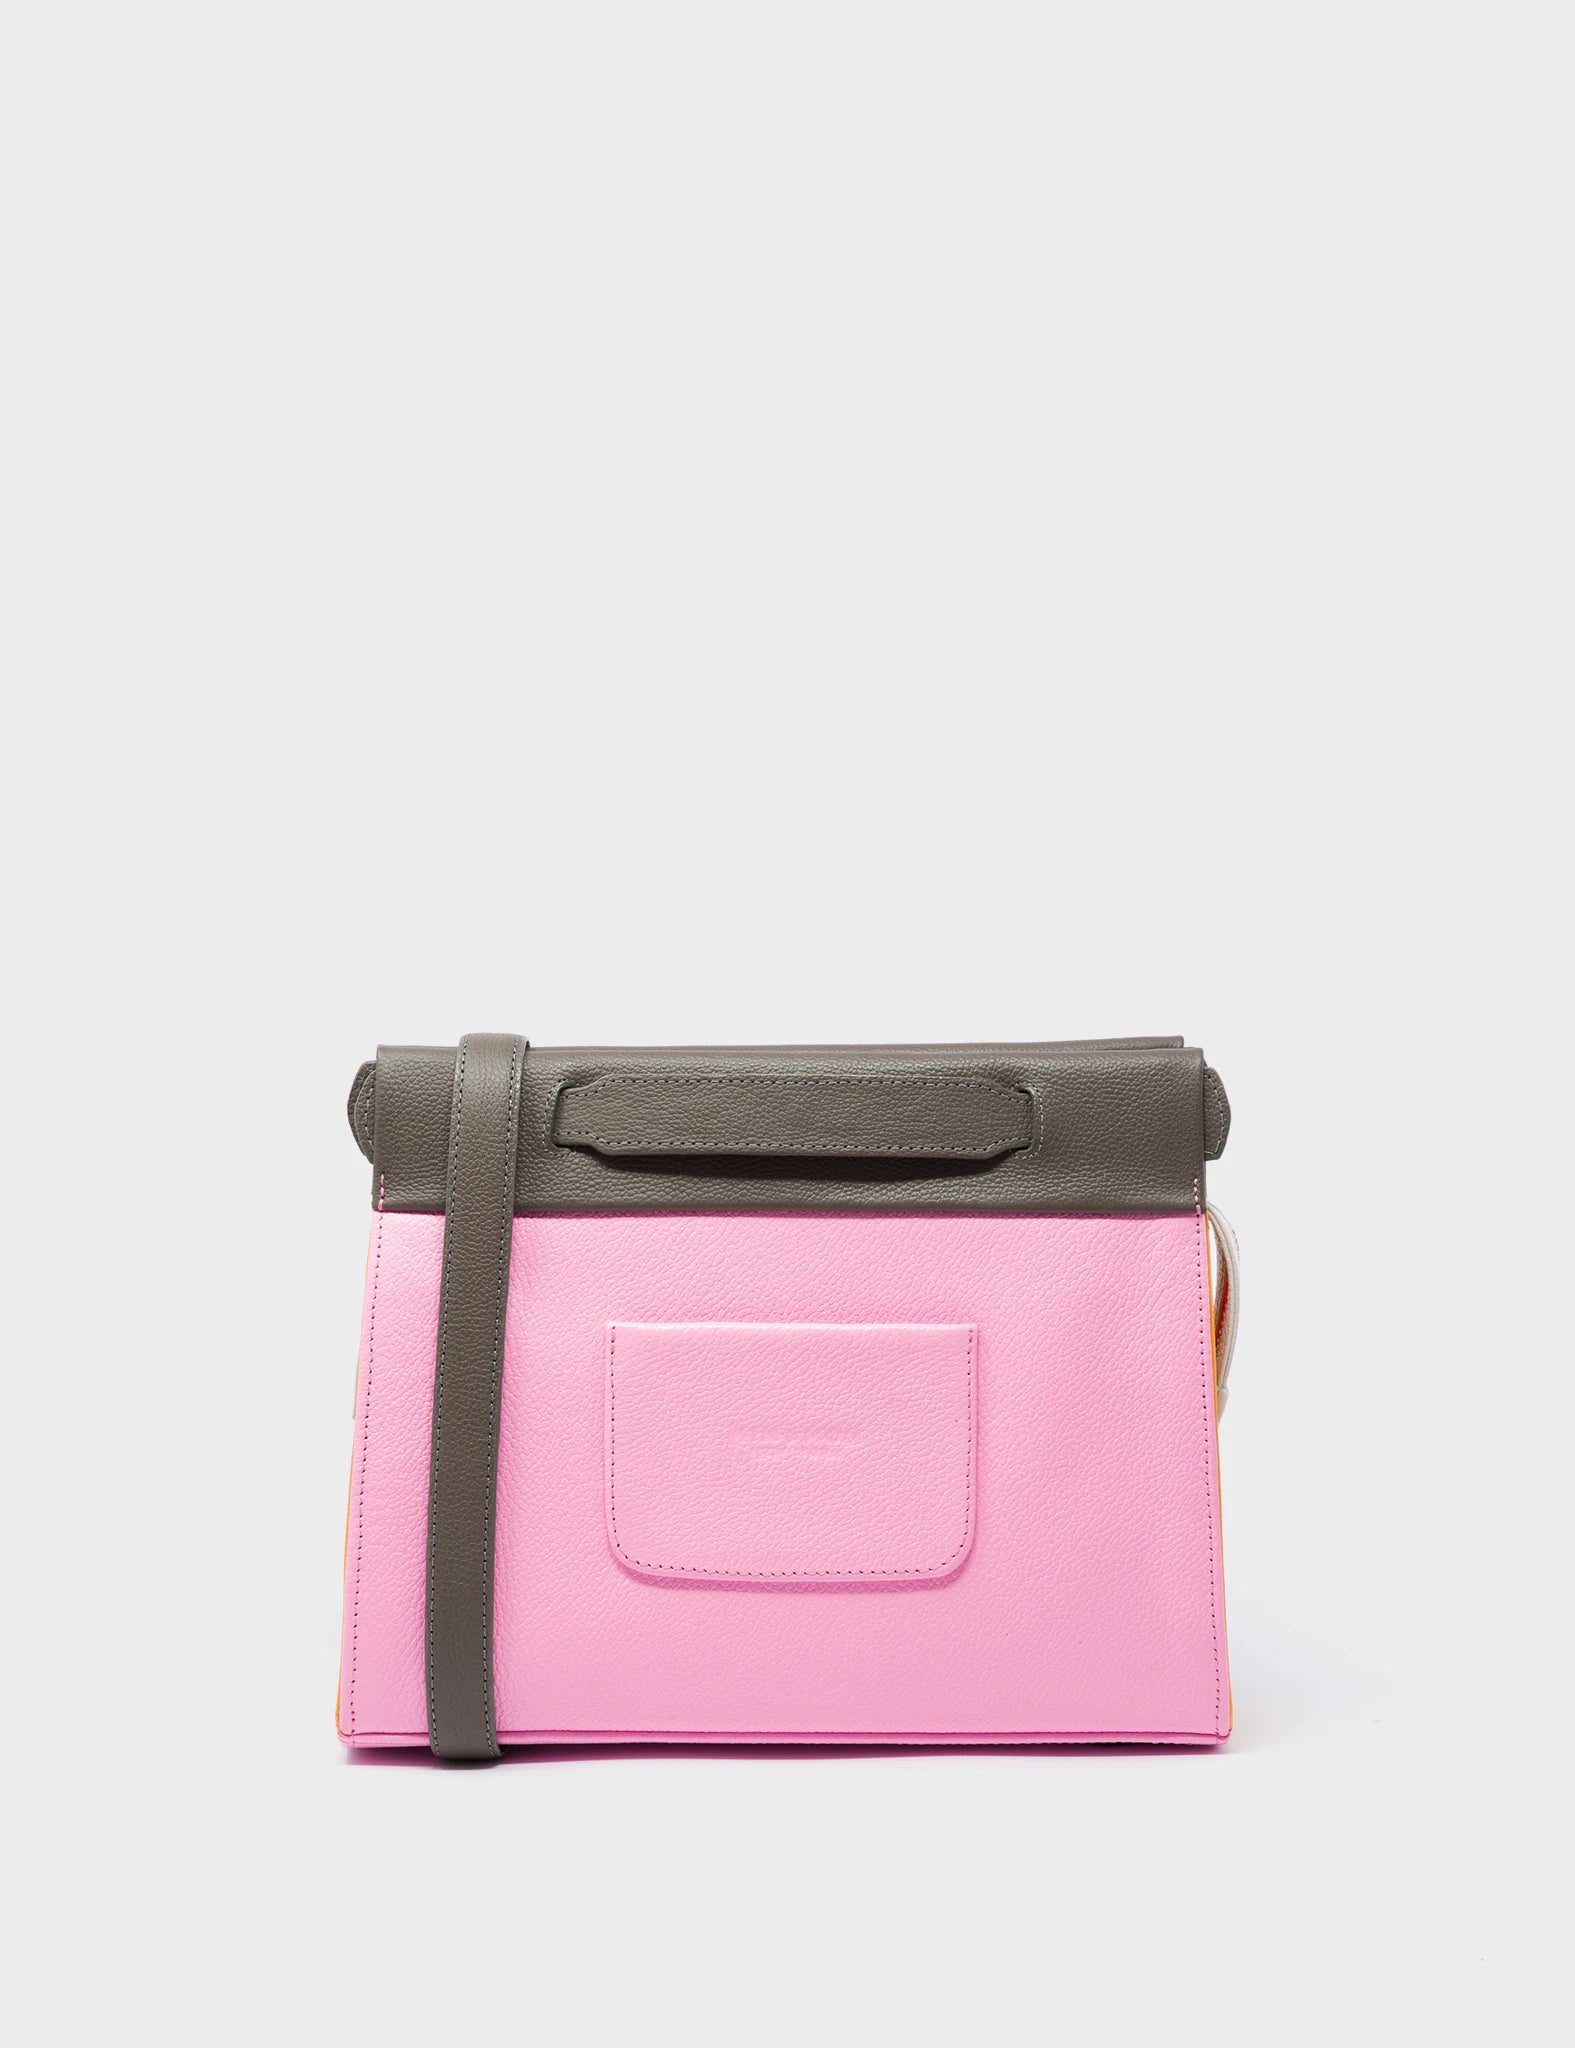 Vali Crossbody Small Taffy Pink Leather Bag - El Tropico Print and Embroidery Design - Back 